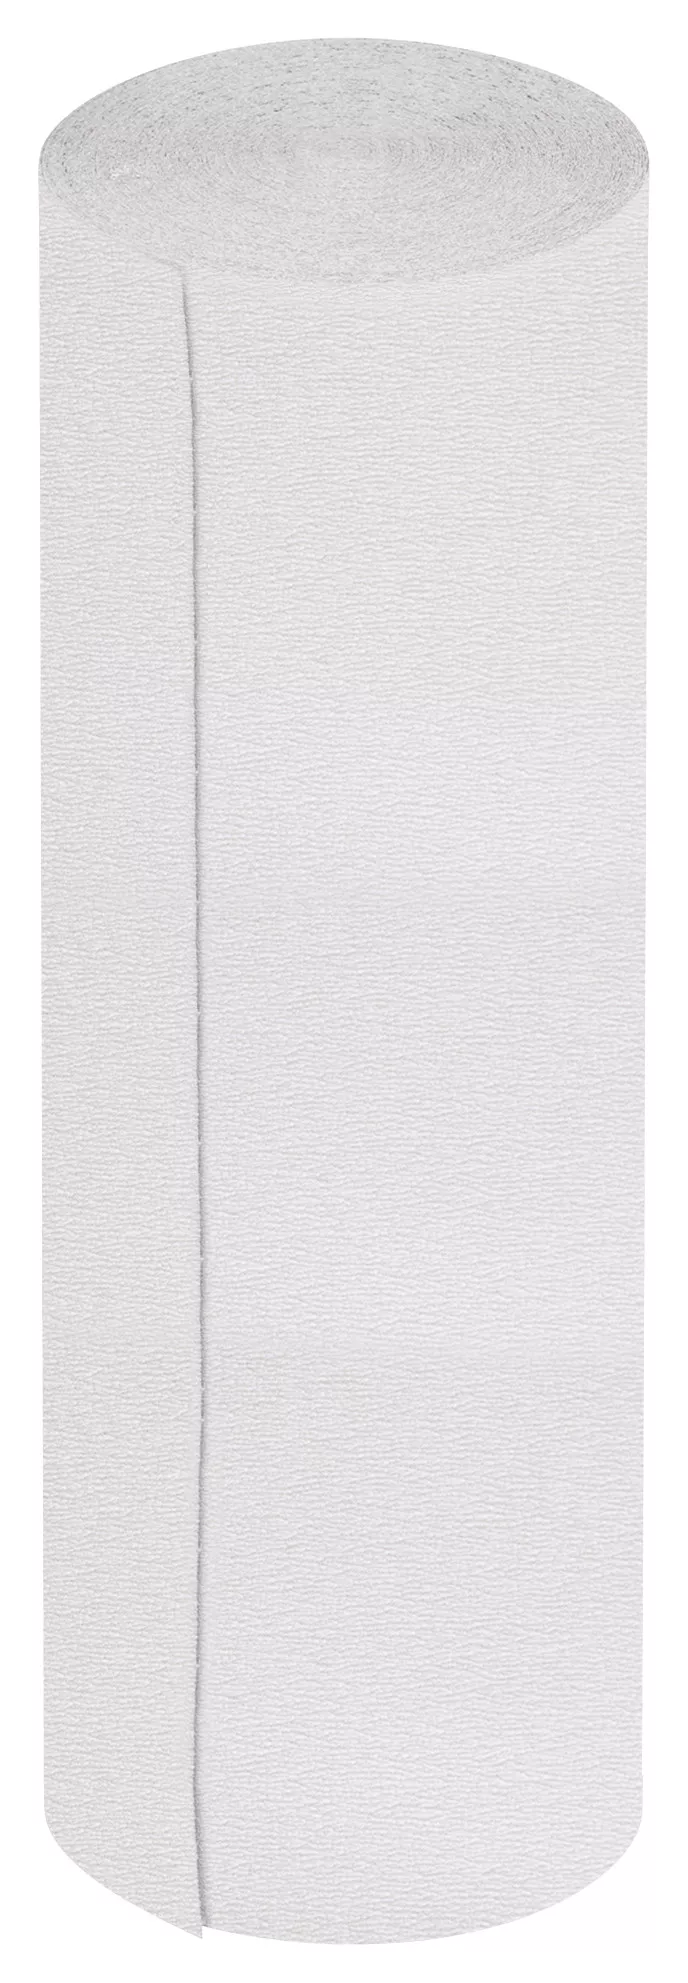 3M™ Stikit™ Paper Refill Roll 426U, 2-1/2 in x 45 in 80 A-weight,
10/Carton, 50 ea/Case